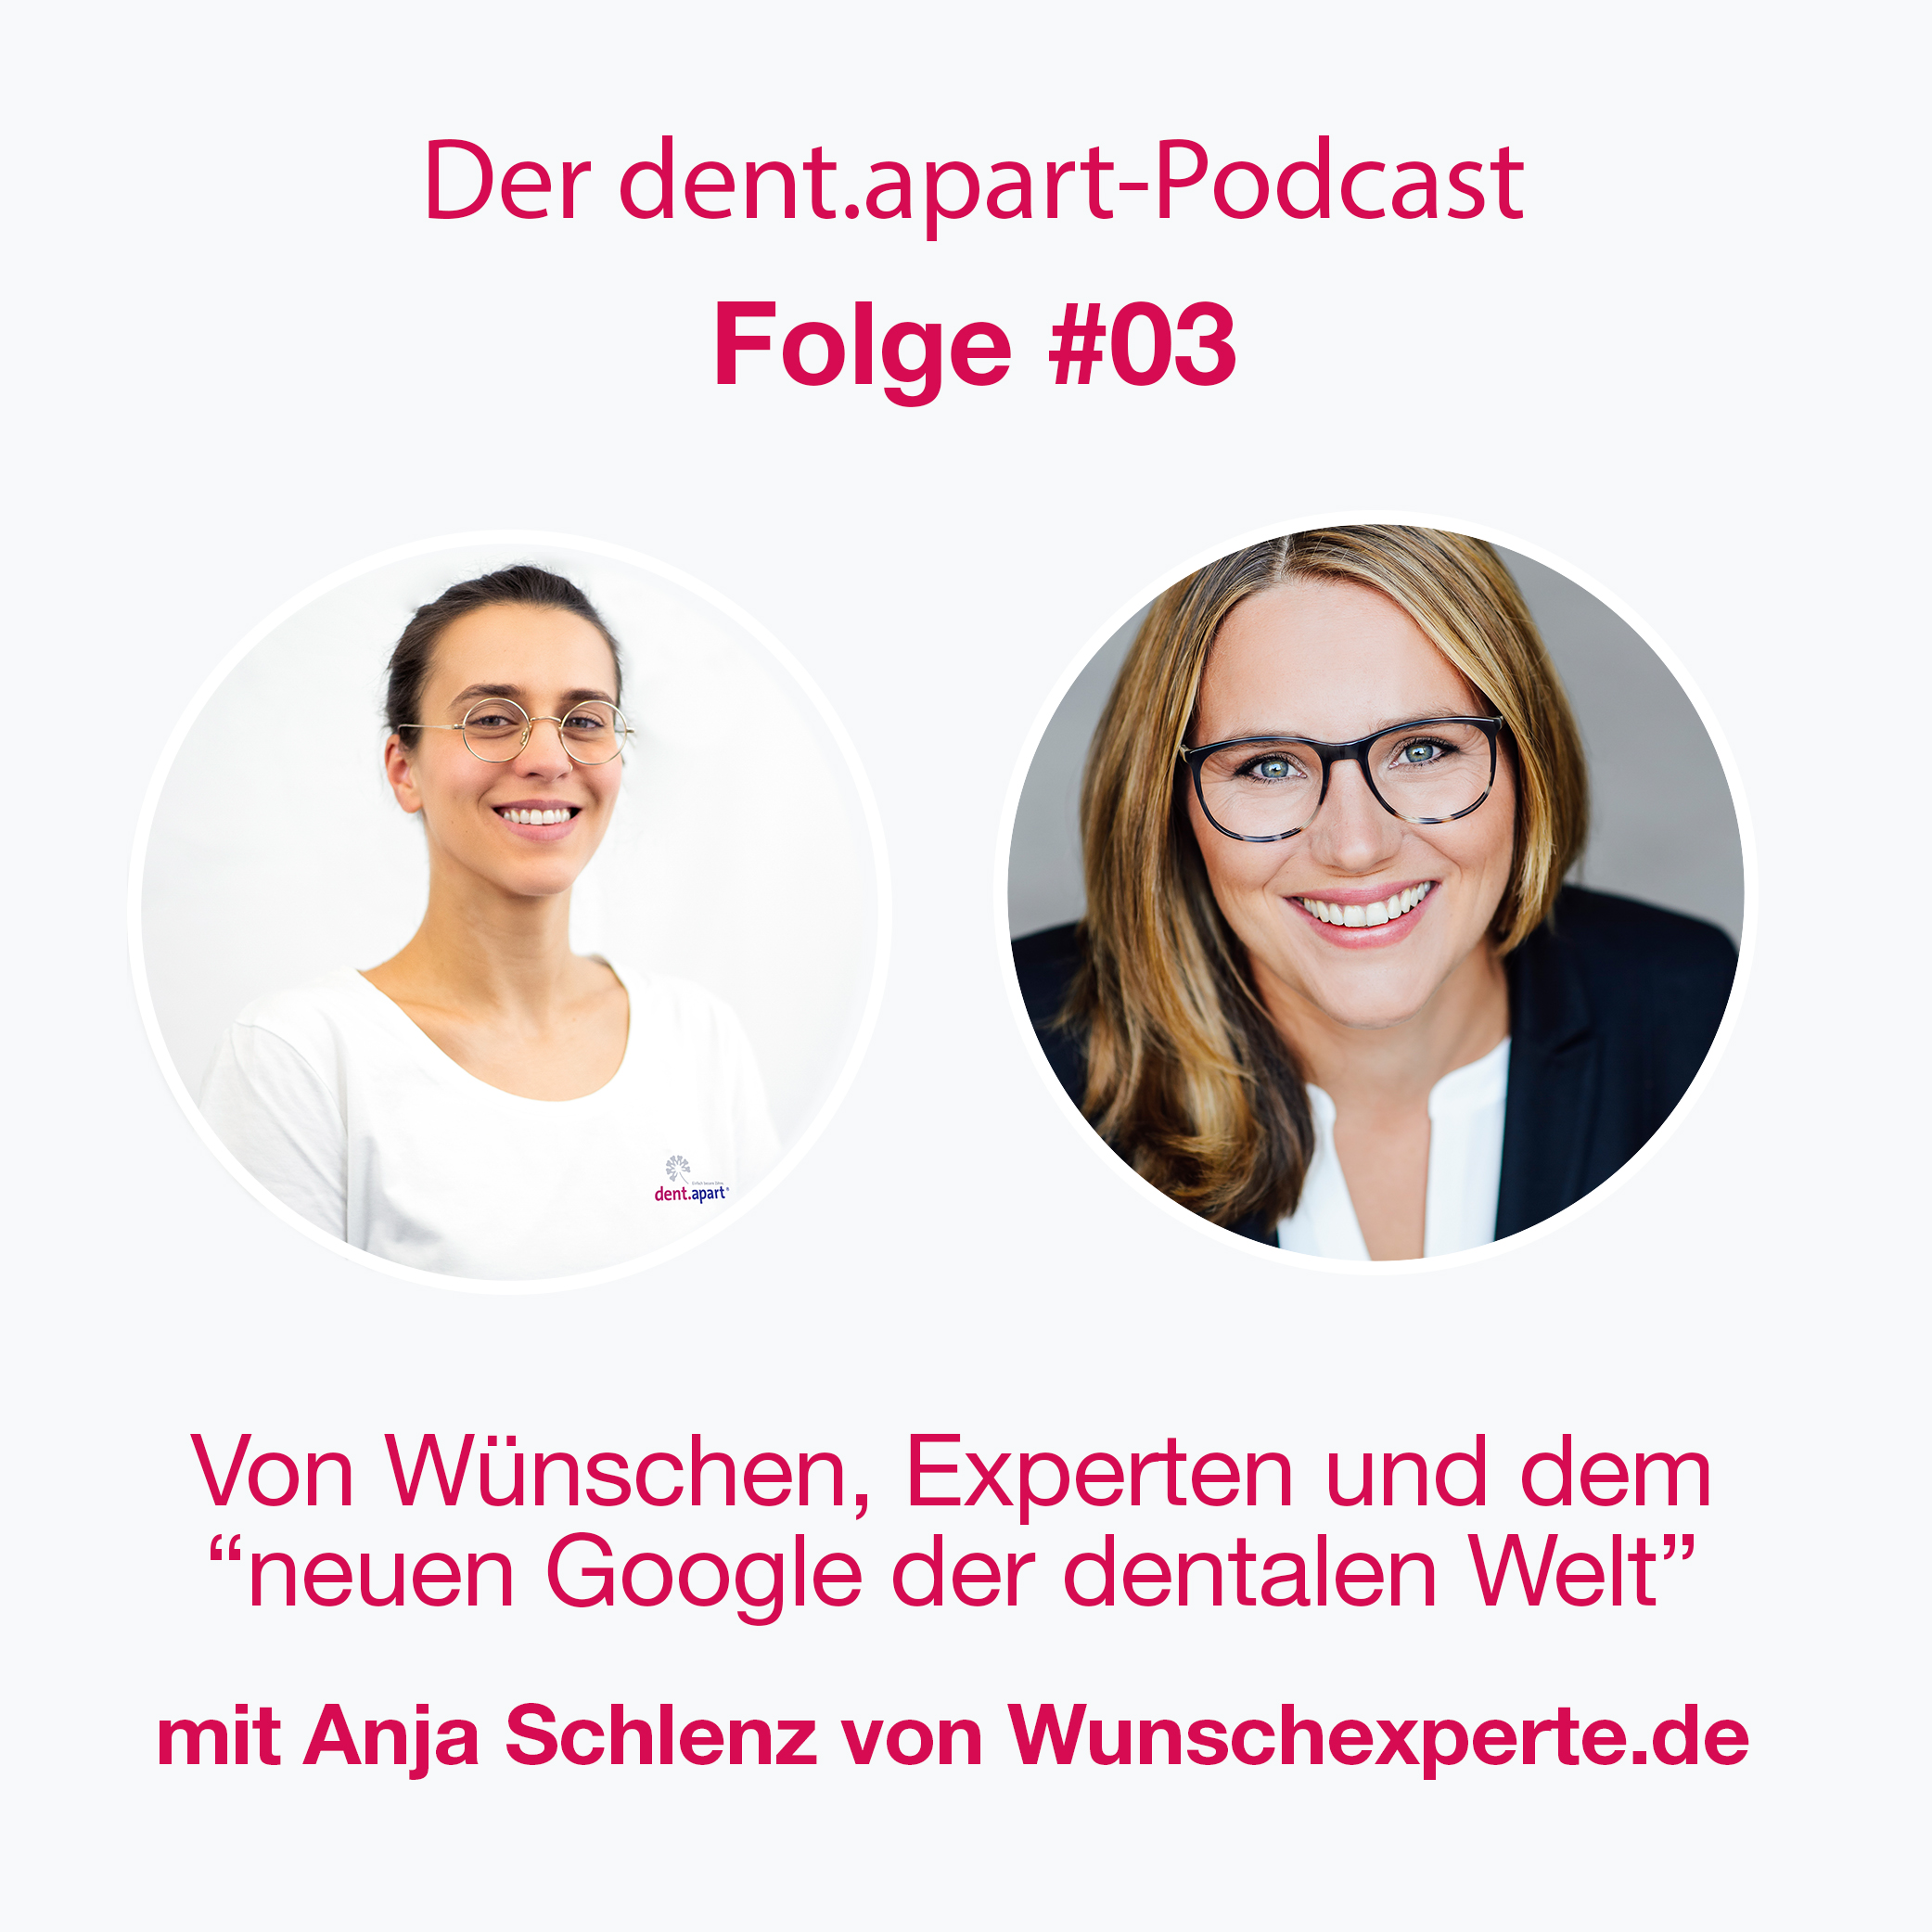 Der dent.apart-Podcast-Folge 03 mit Anja Schlenz